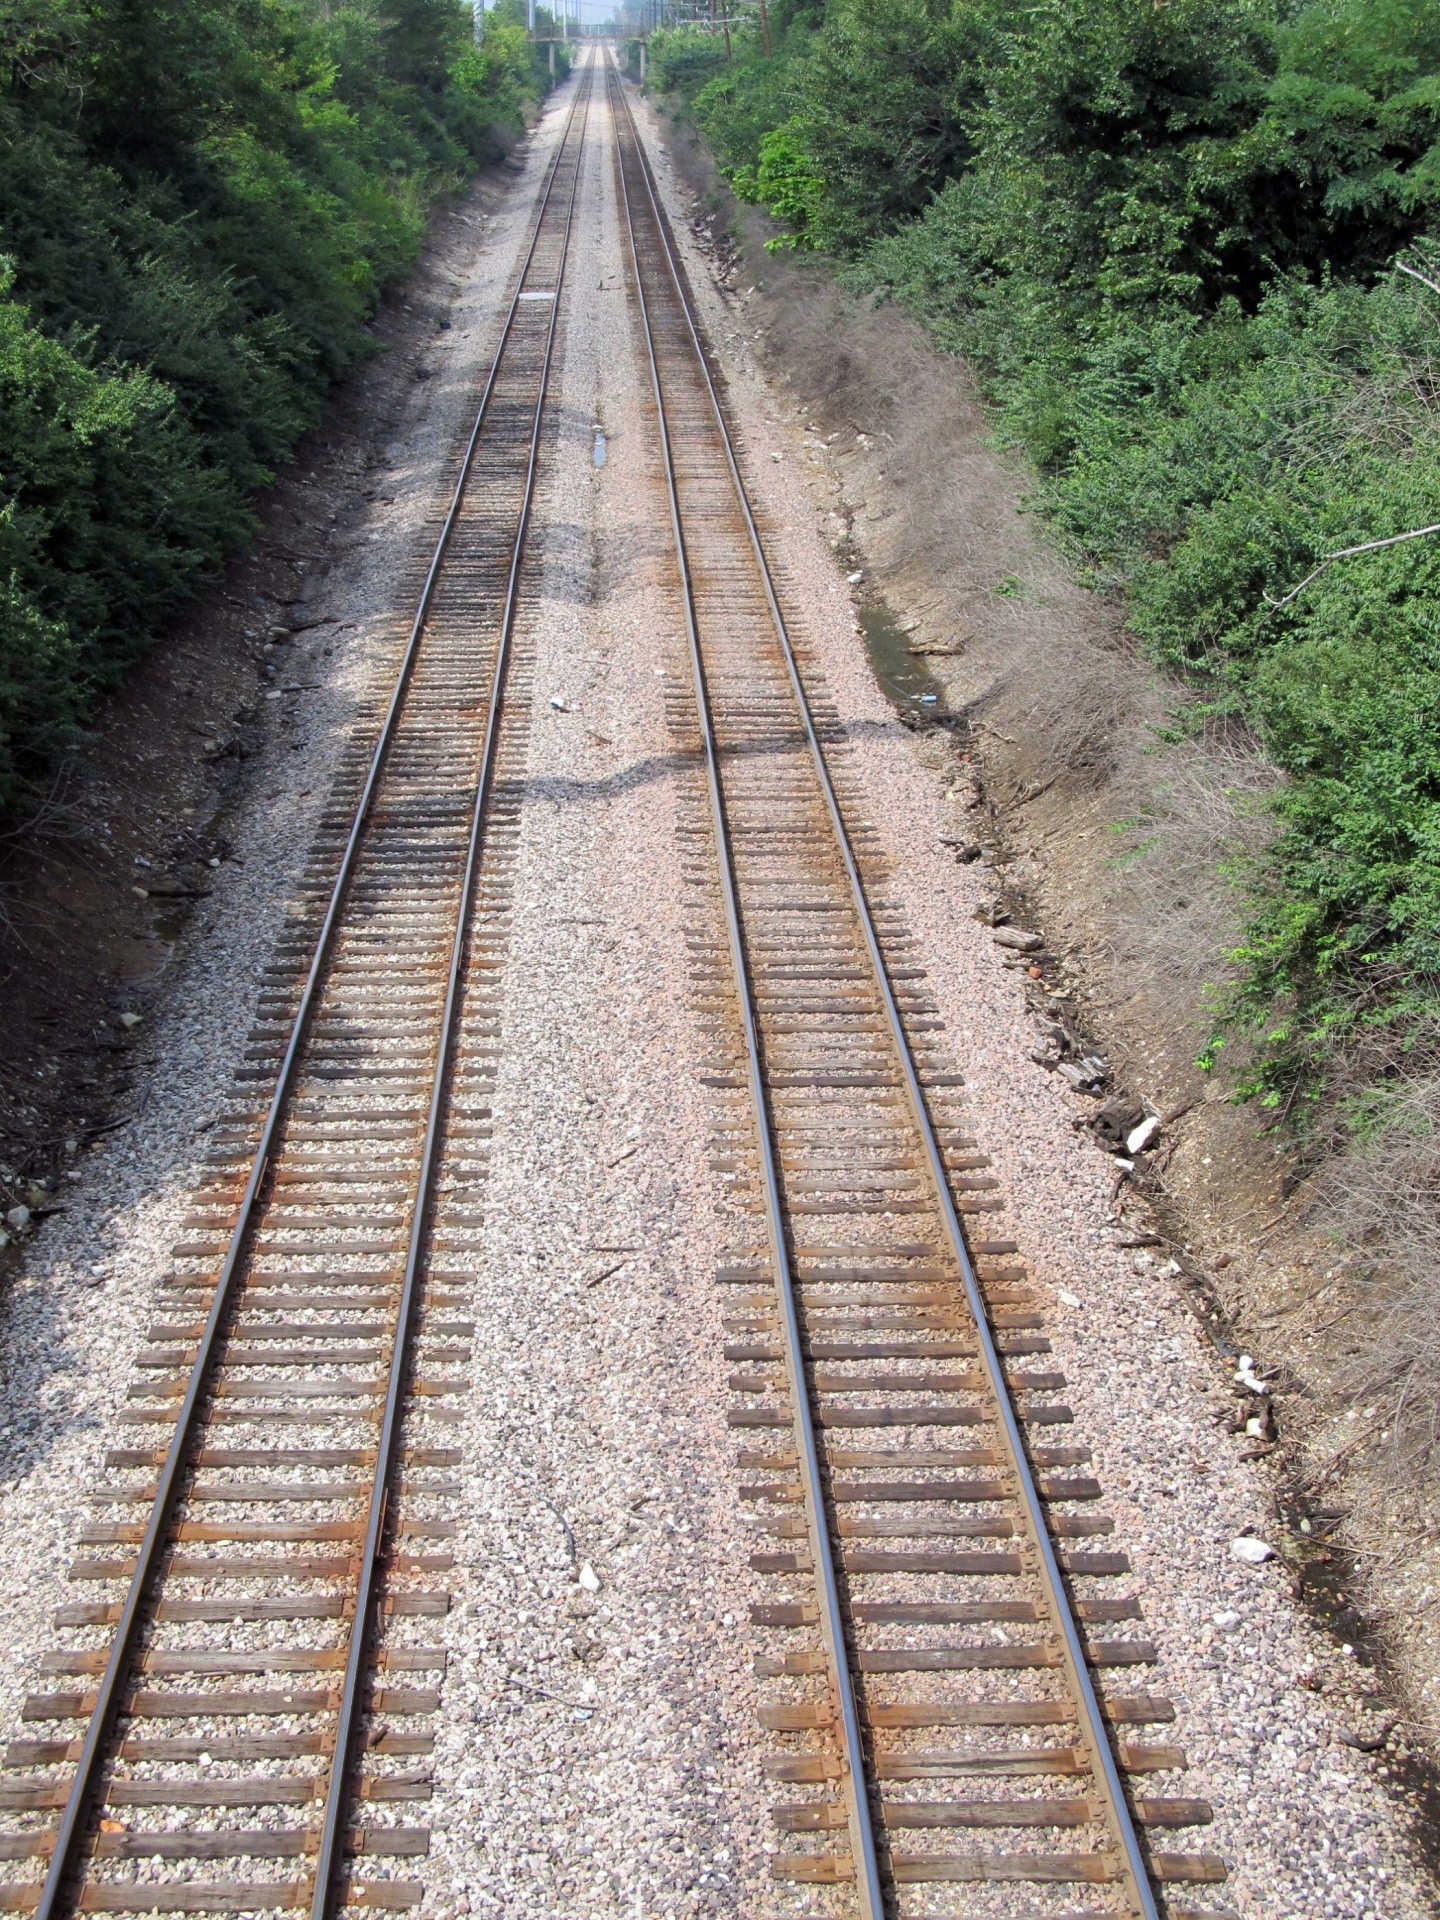 View looking down urban railroad tracks